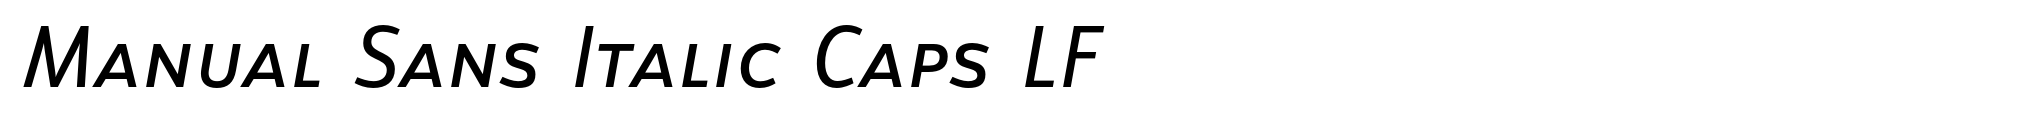 Manual Sans Italic Caps LF image